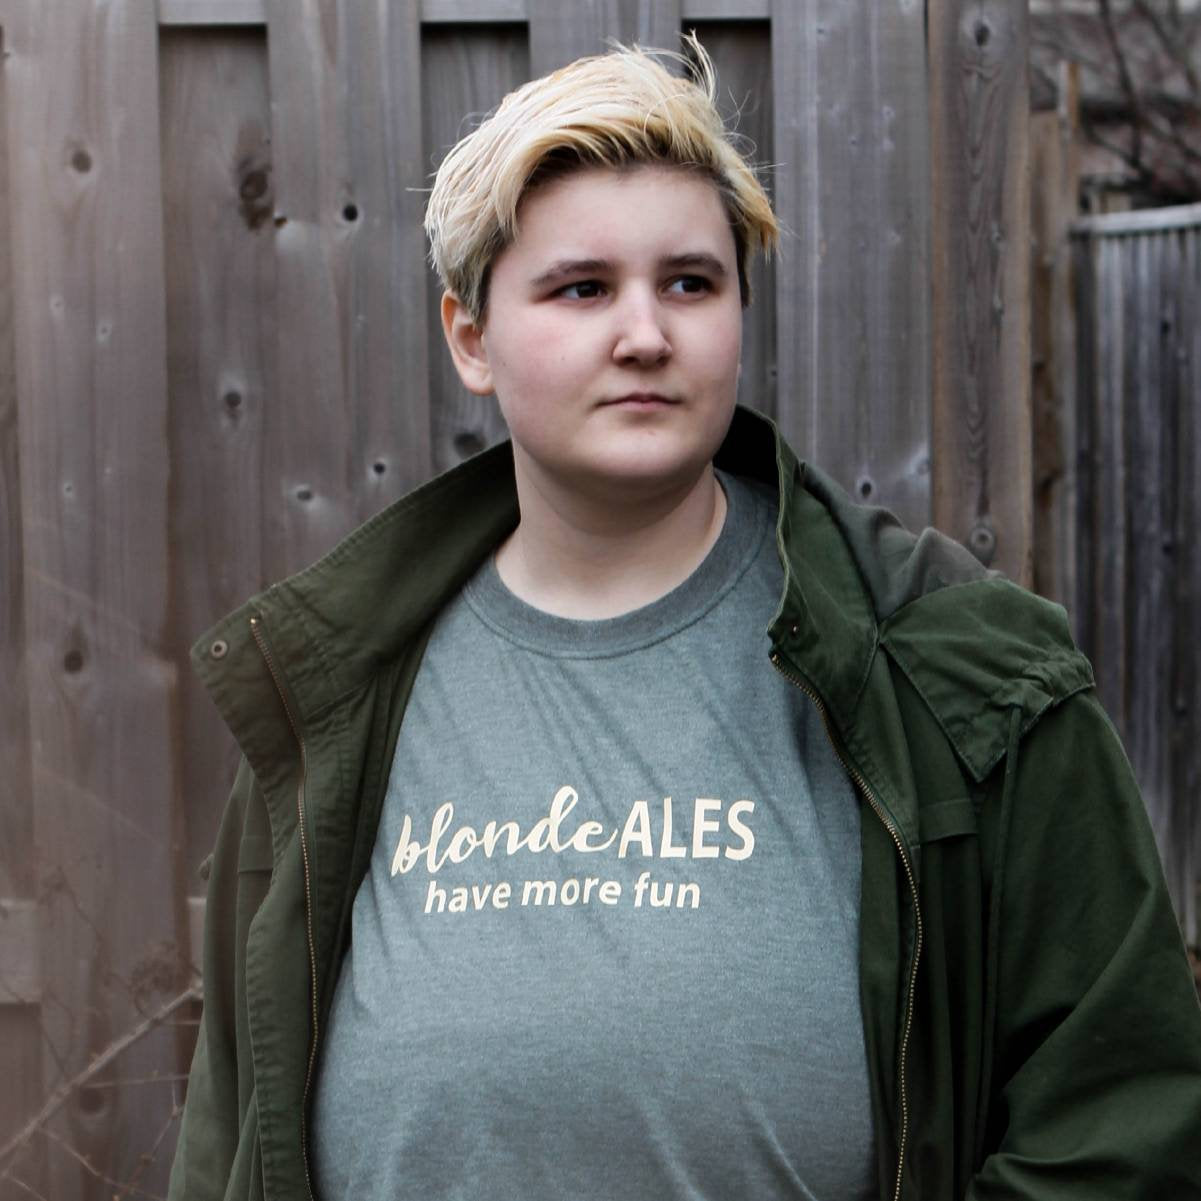 Blonde Ales have more fun unisex tshirt